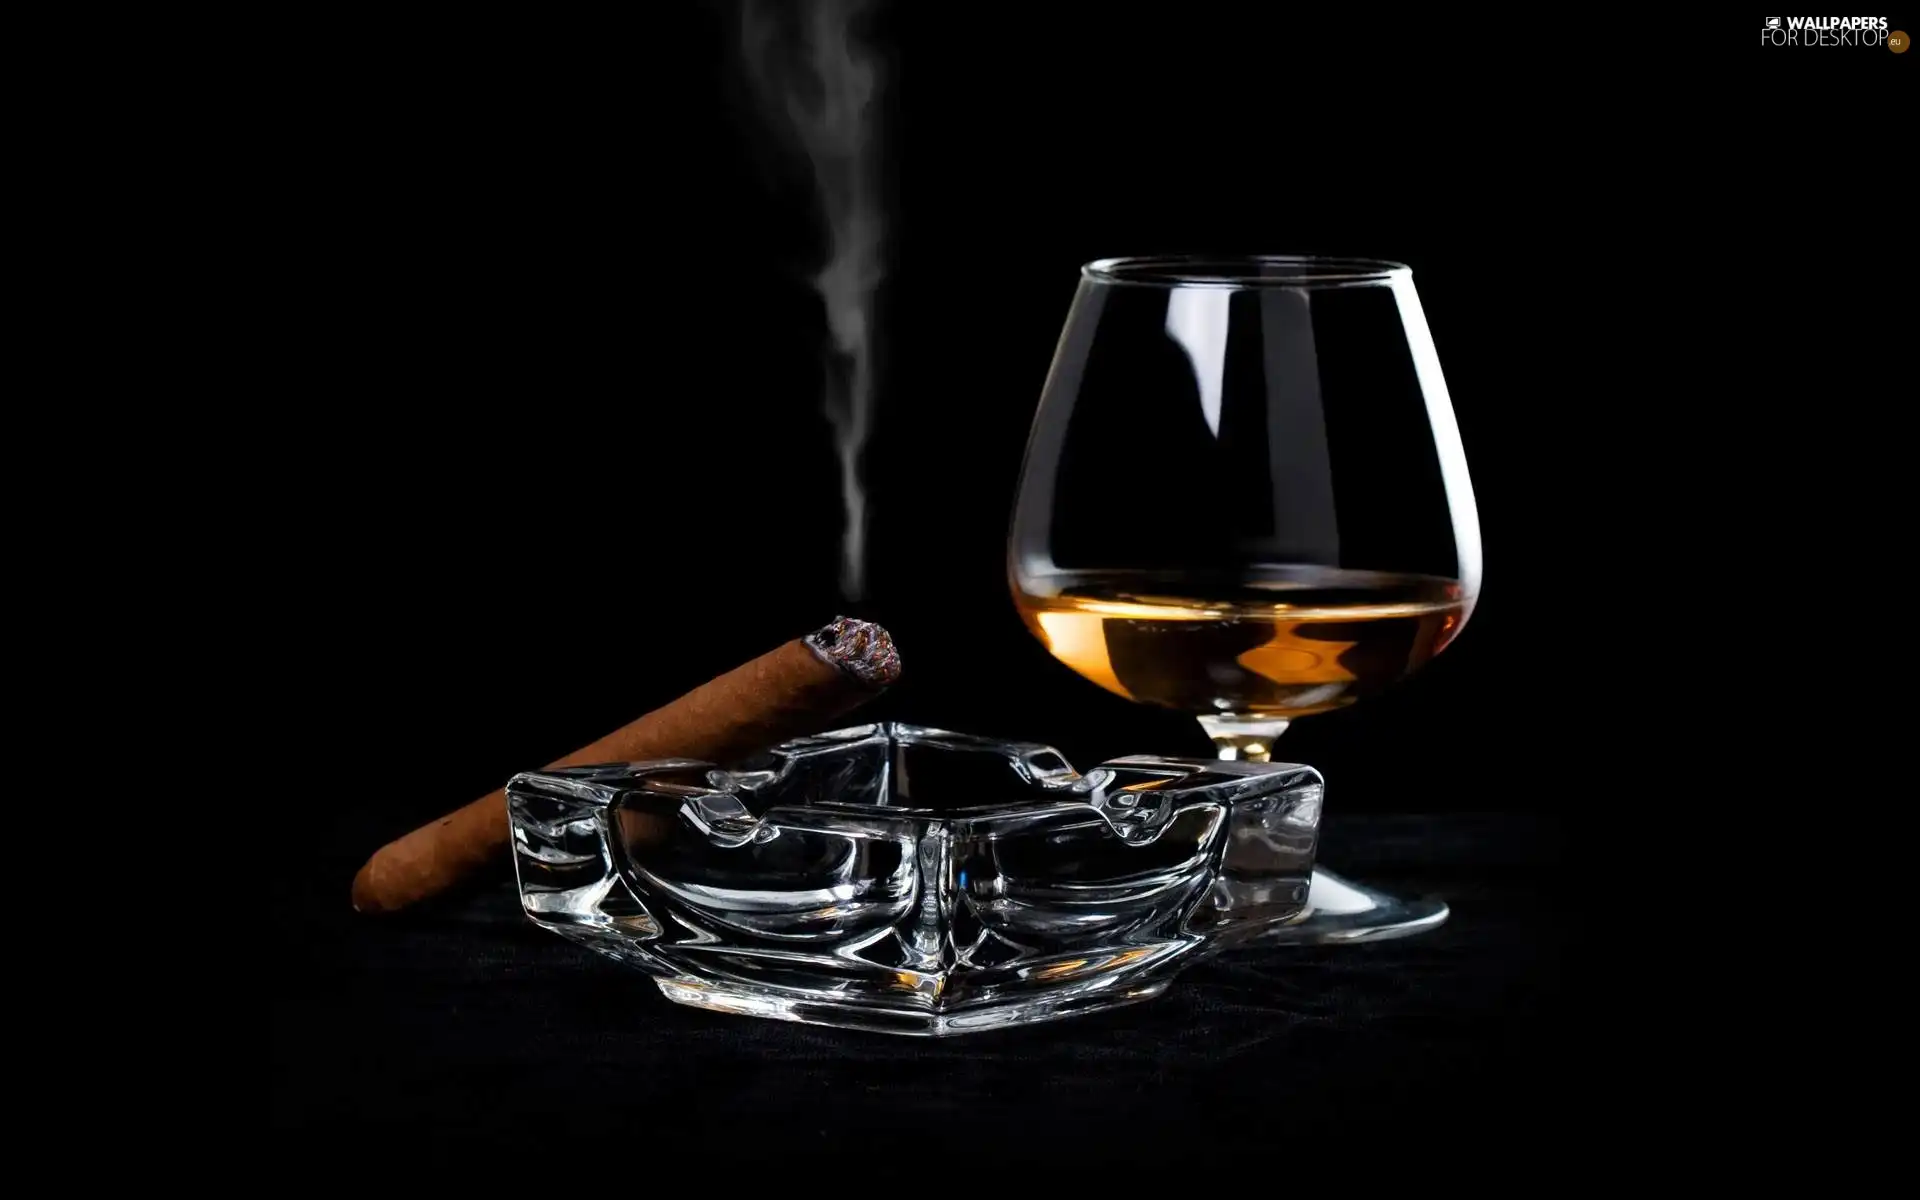 ashtray, cognac, cigar